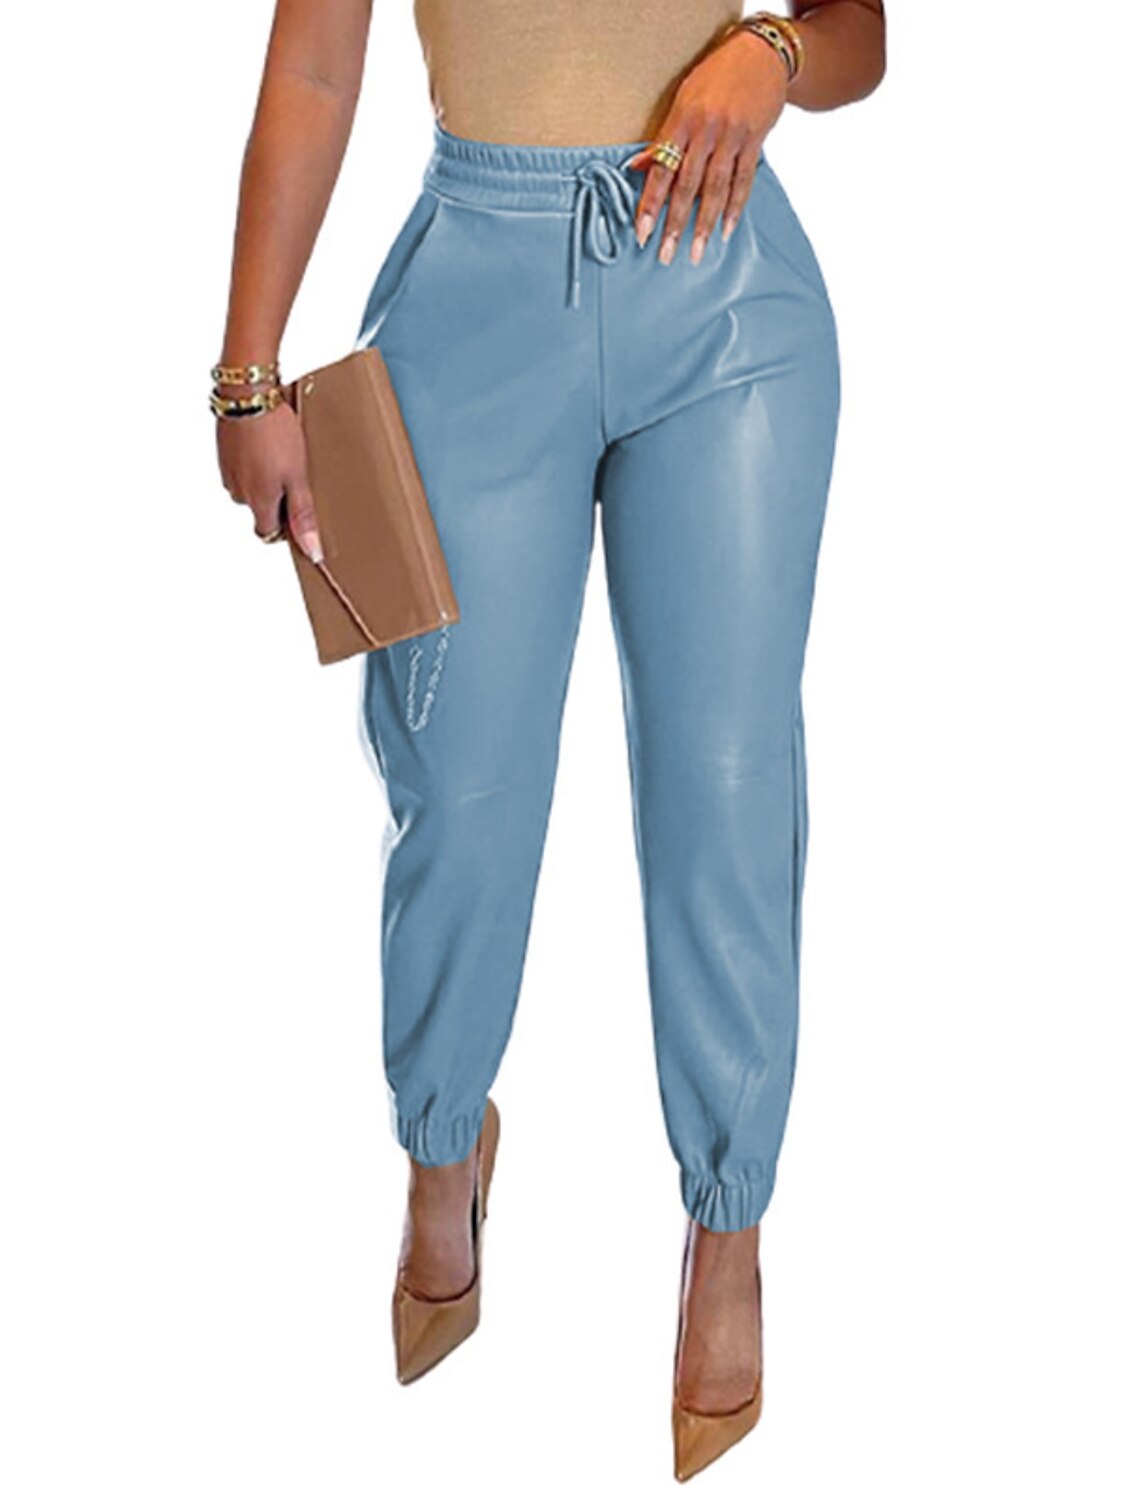 Women Blue Color Polka Dot White Fashion Belt Elastic Hip High Waist XS S M L XL 